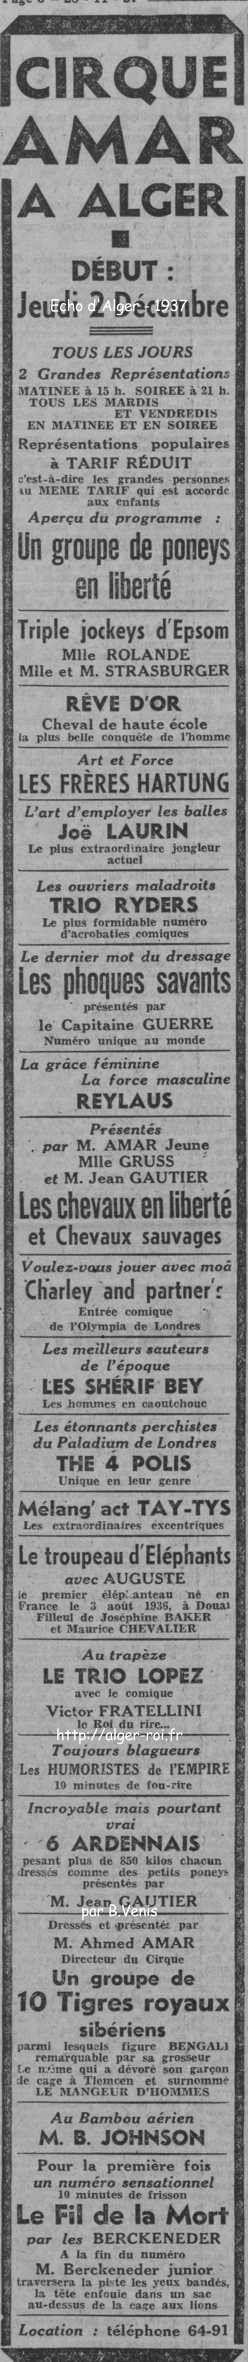 programme du cirque amar,1937